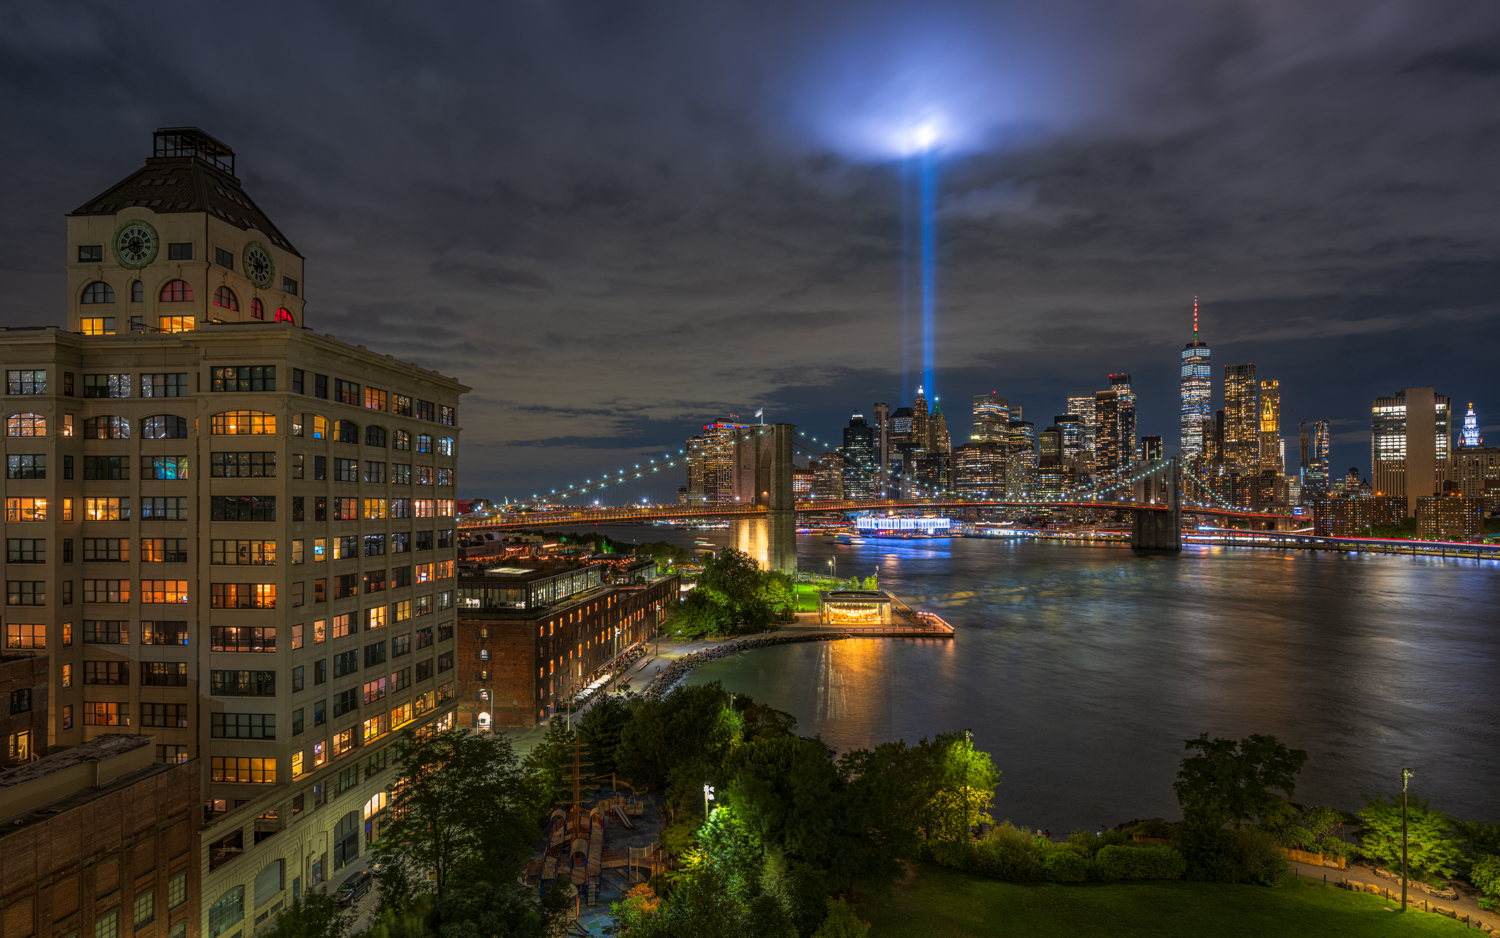 From Dumbo's shore, we cast our gaze,Brooklyn Bridge, through nighttime haze,9/11's lights pierce the night,A cloud embraced...